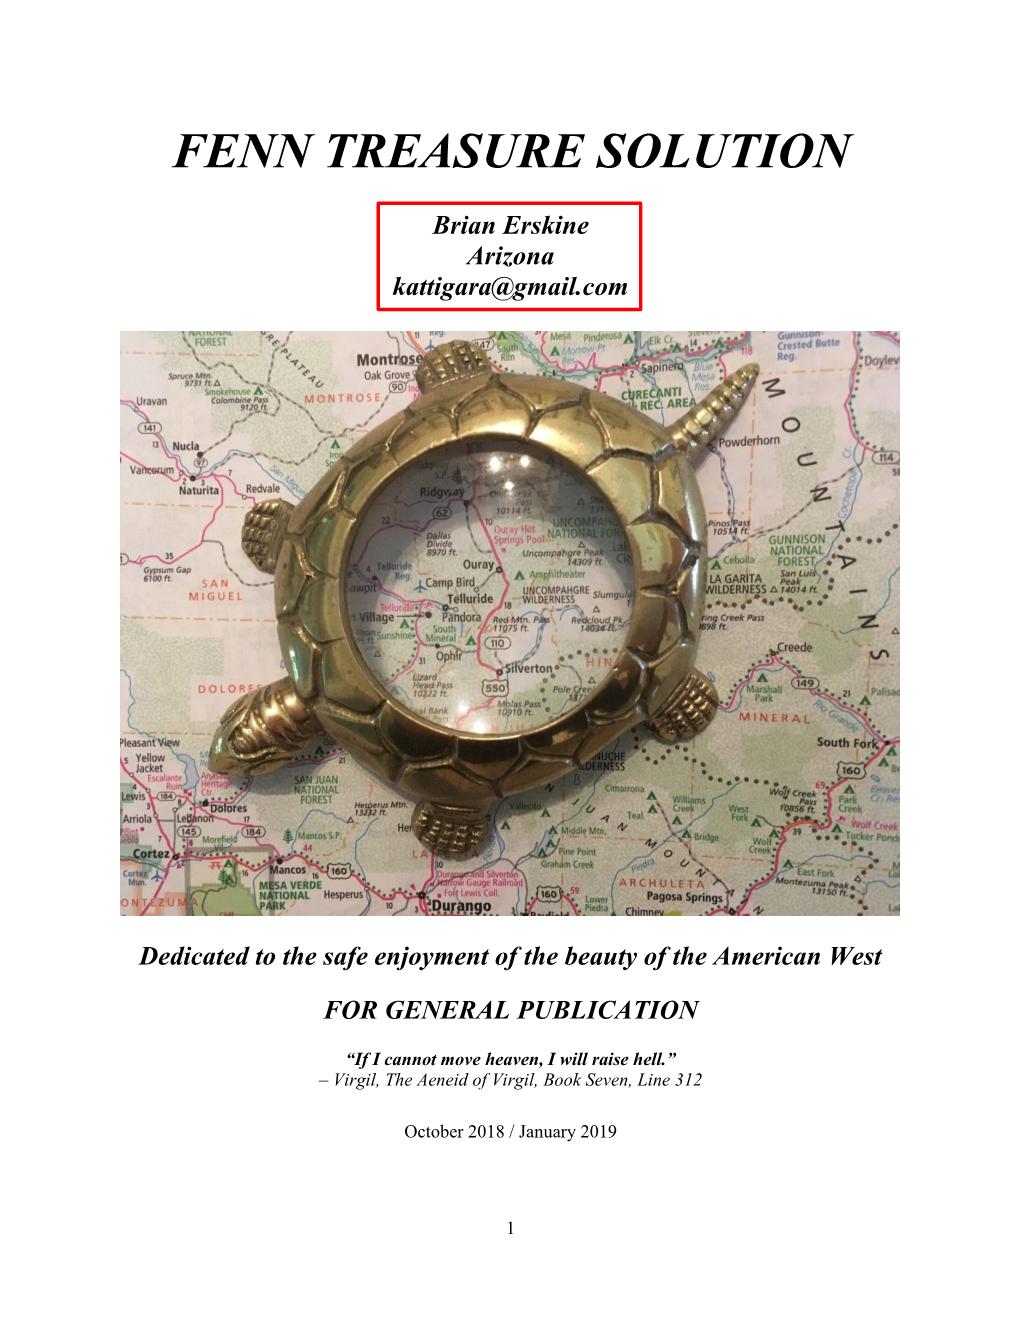 Fenn Treasure Solution